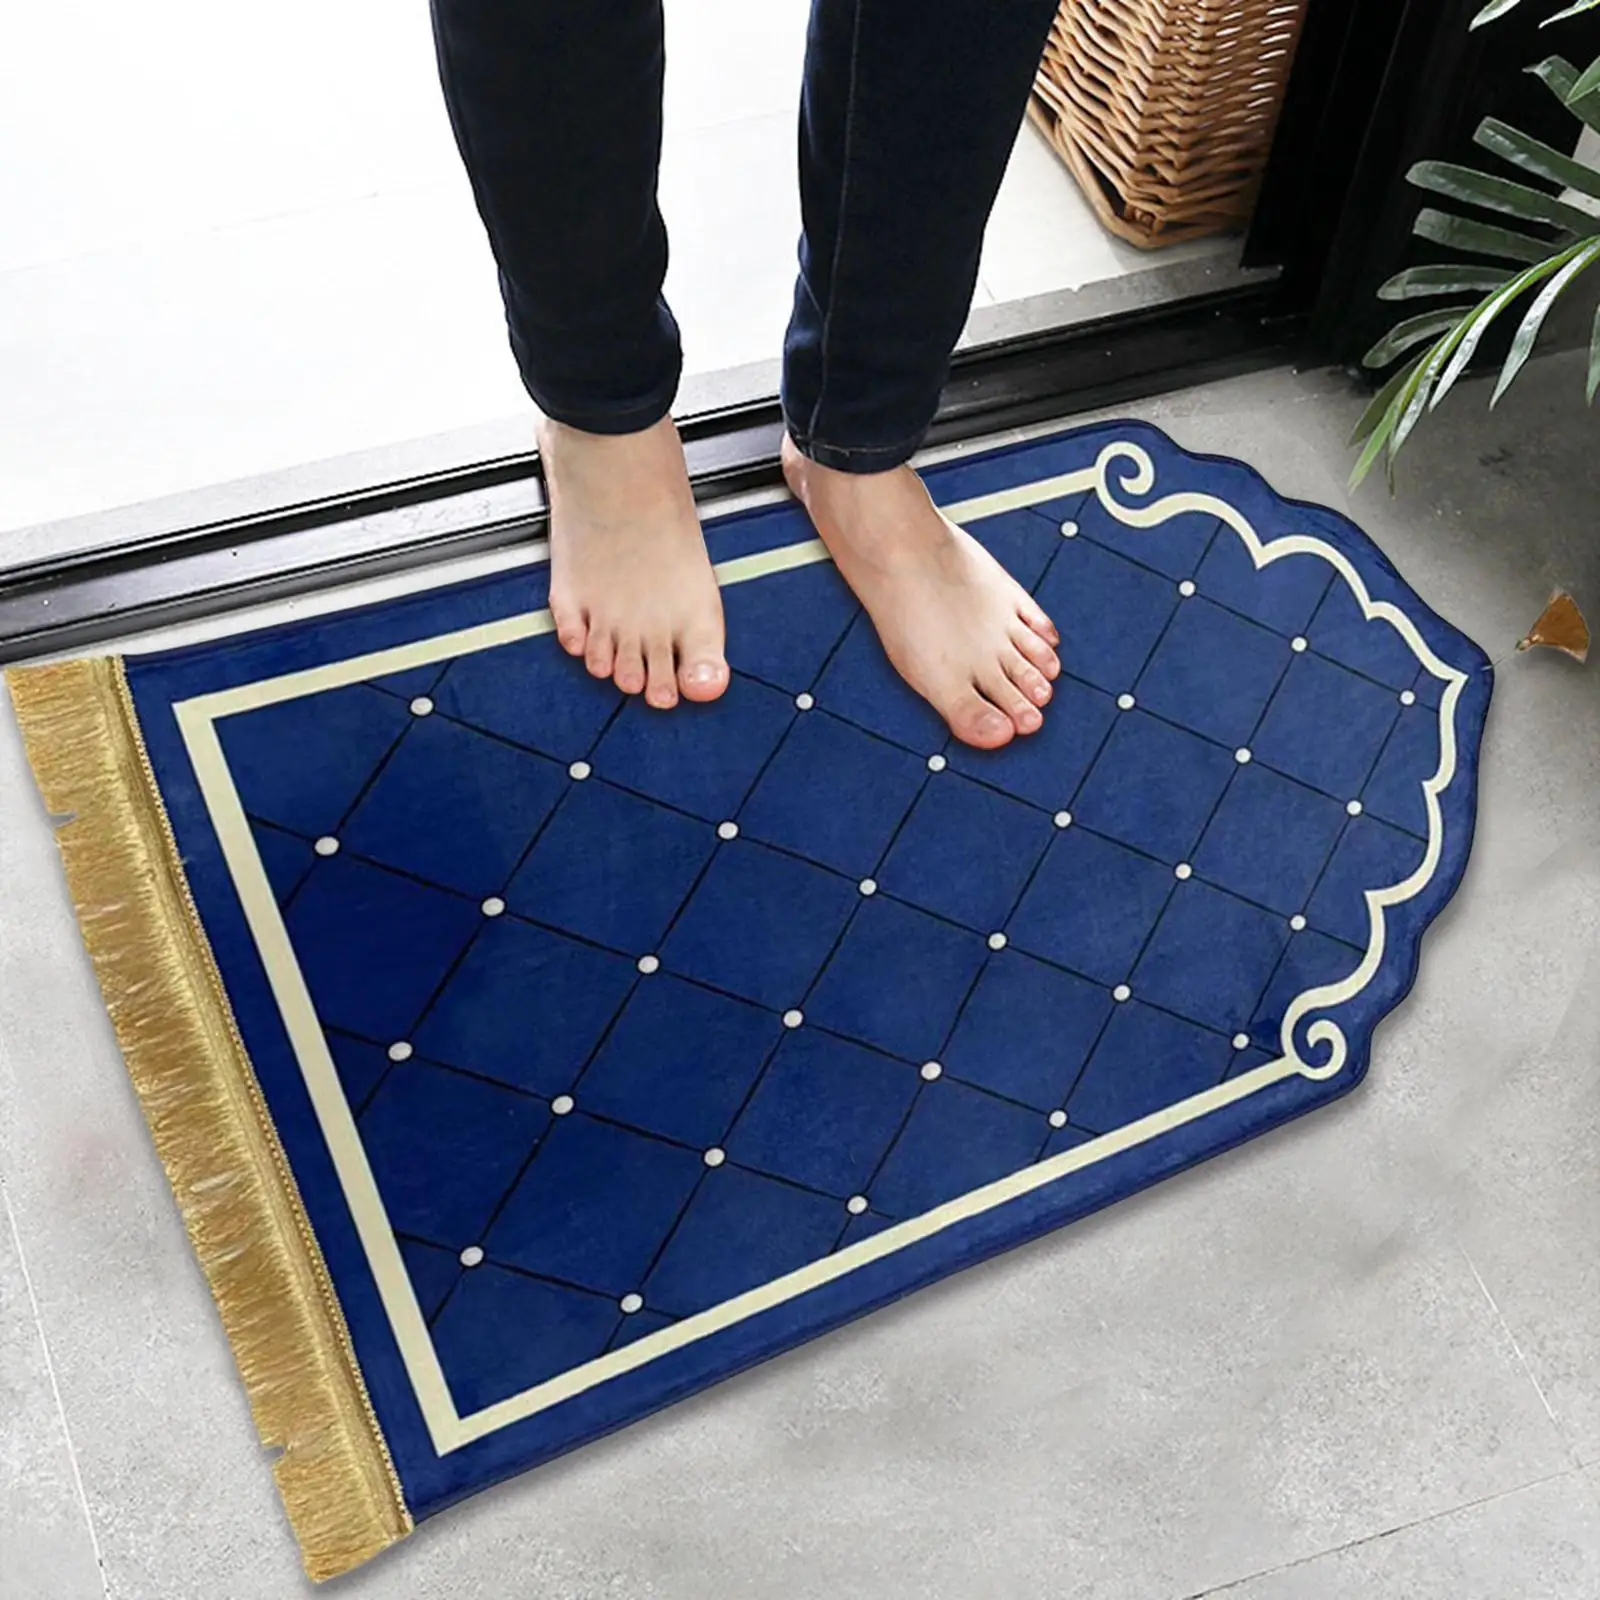 Portable Prayer Carpet Mat Hajj Wedding Collectible Birthday Soft Muslim Carpet Floor Carpet Islamic Muslim Prayer Rug Gift